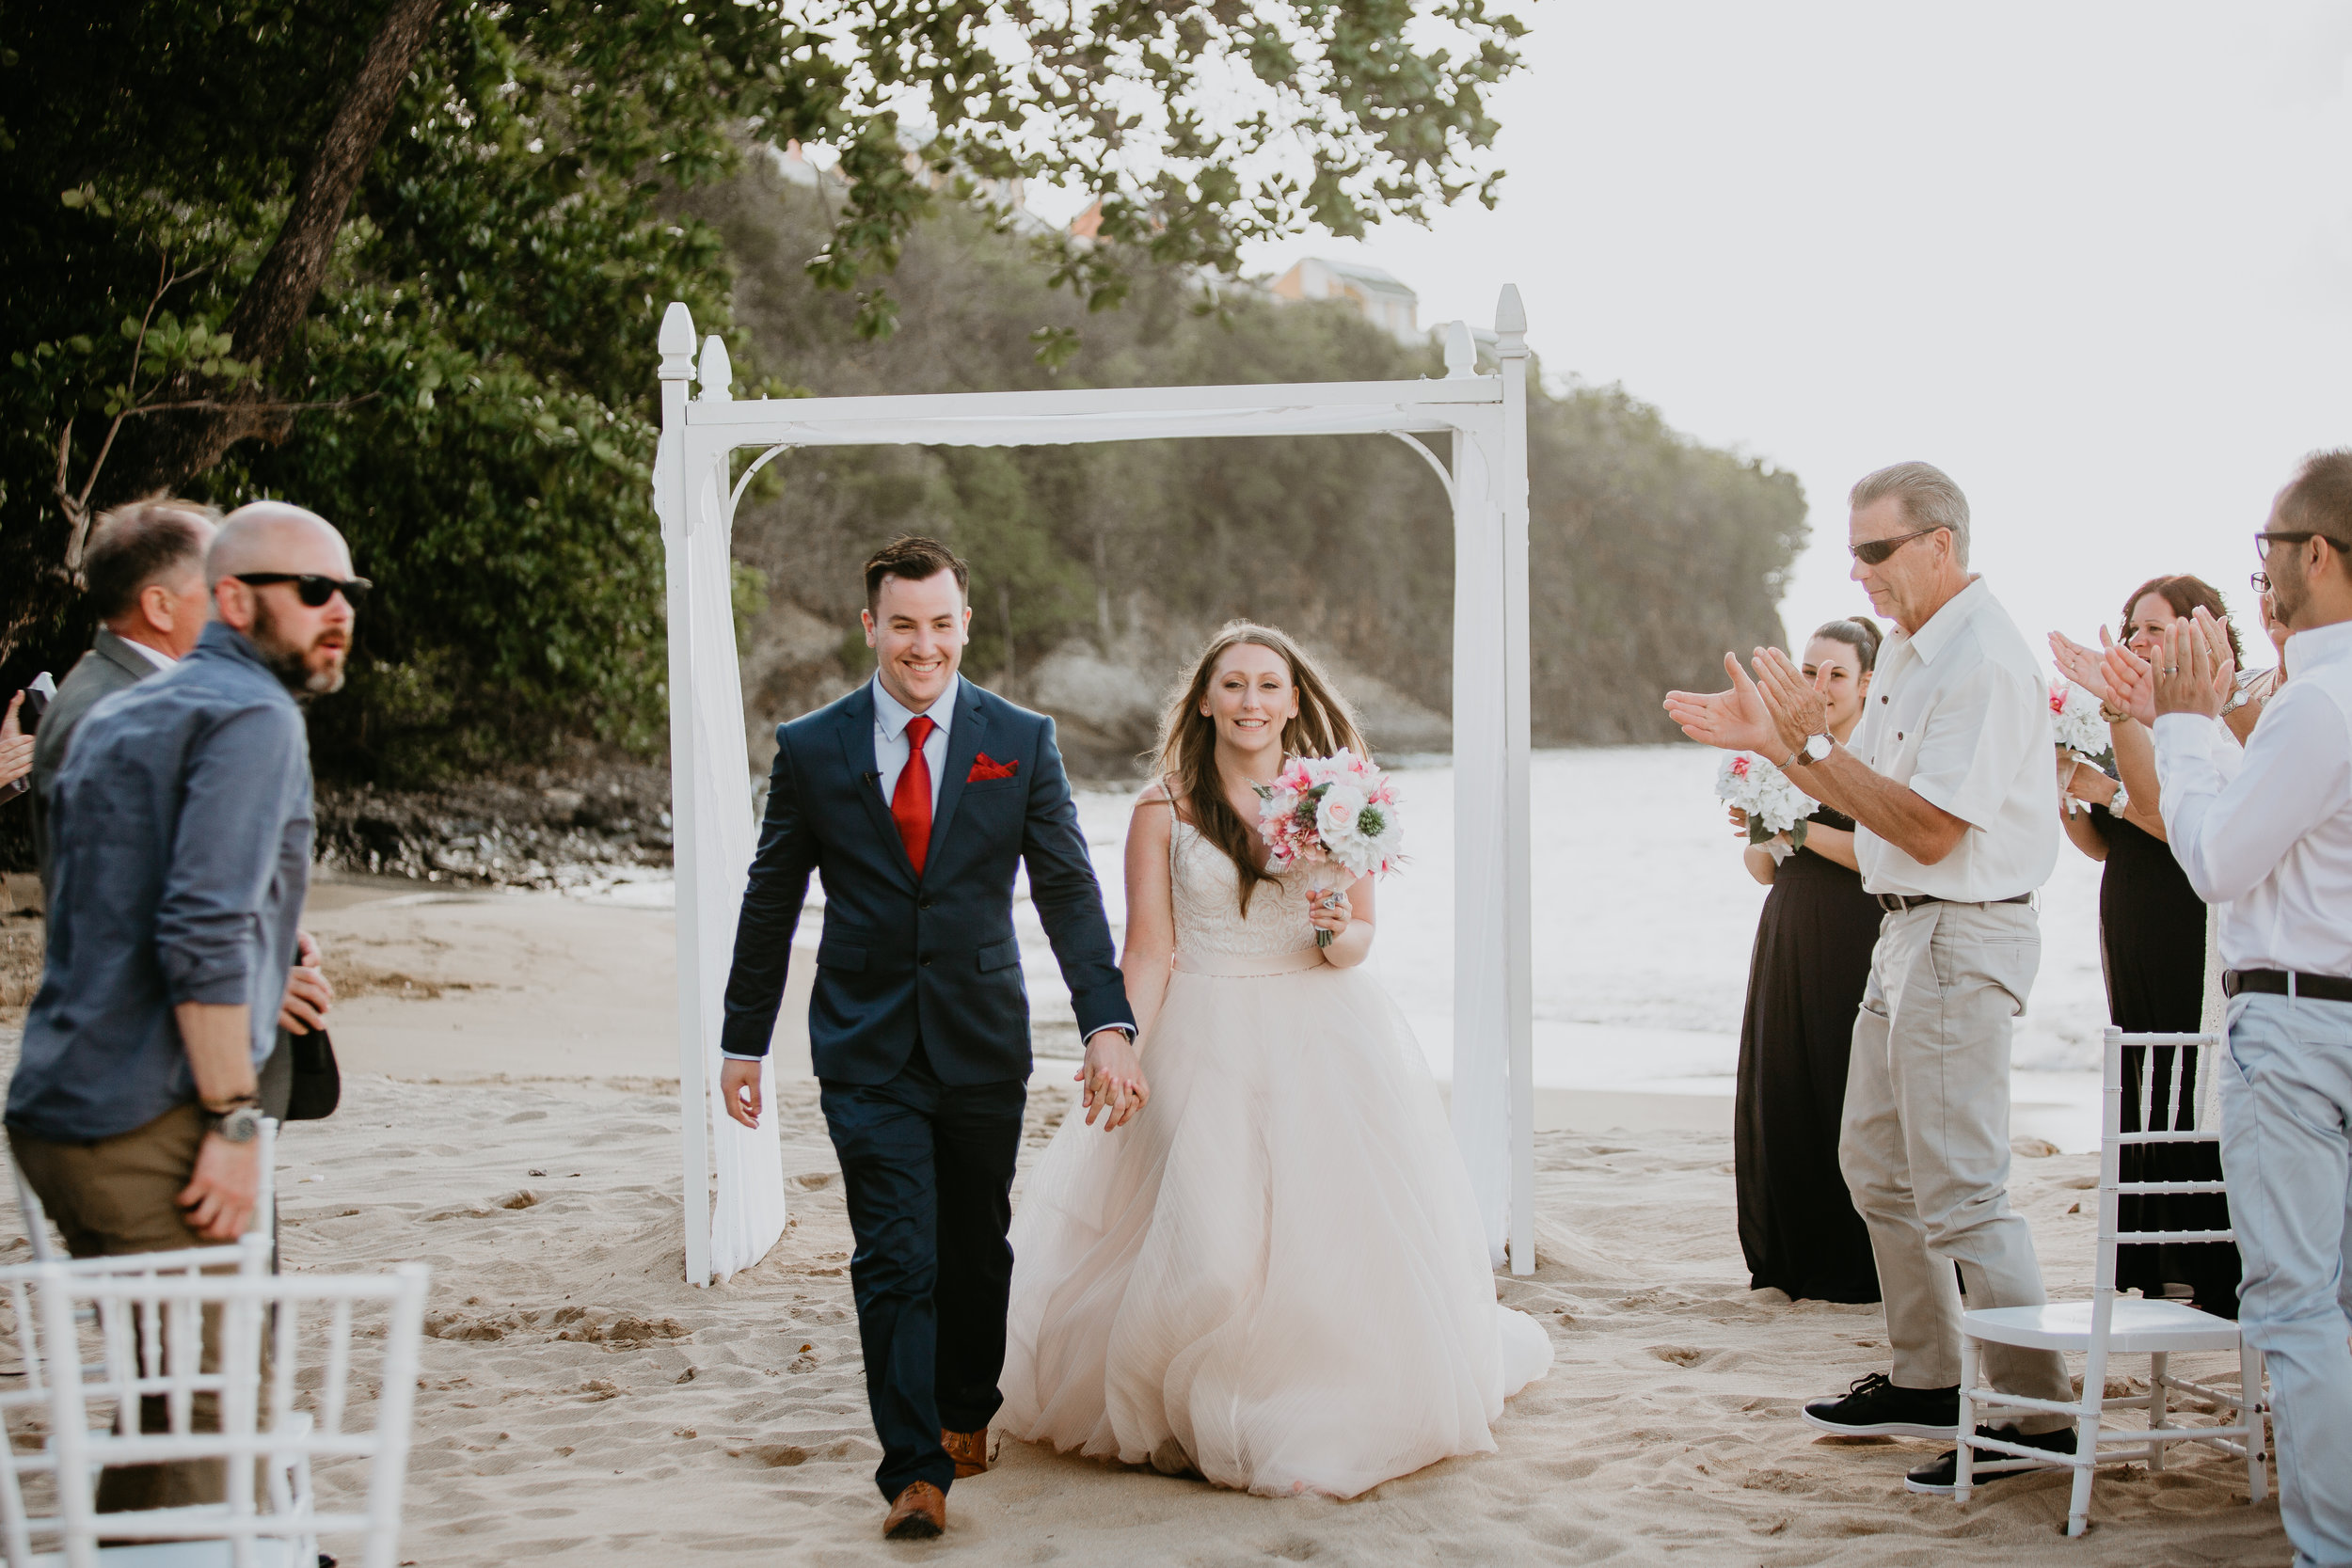 nicole-daacke-photography-destination-wedding-in-st-lucia-sandals-la-toc-intimate-island-wedding-carribean-elopement-photographer-chill-island-wedding-74.jpg